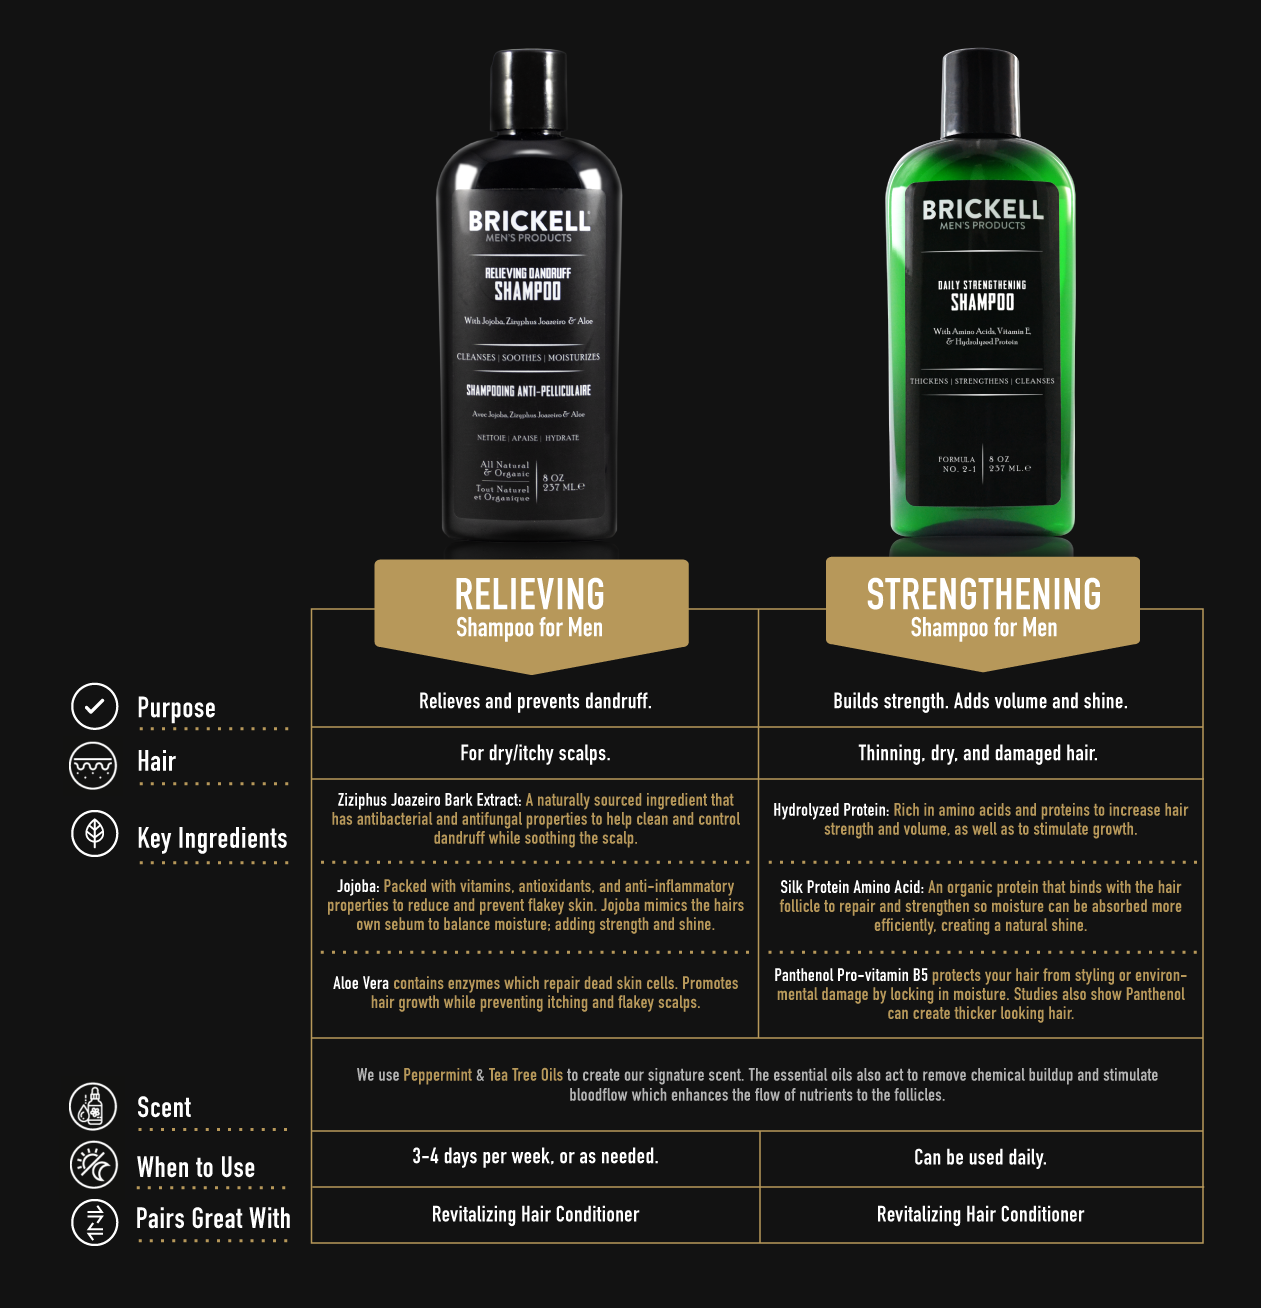 Brickell Men's Products Relieving Dandruff Shampoo, Compare Shampoo, Shampoo Comparisons, Dandruff Shampoo, Flakey Scalp, Flaky Hair